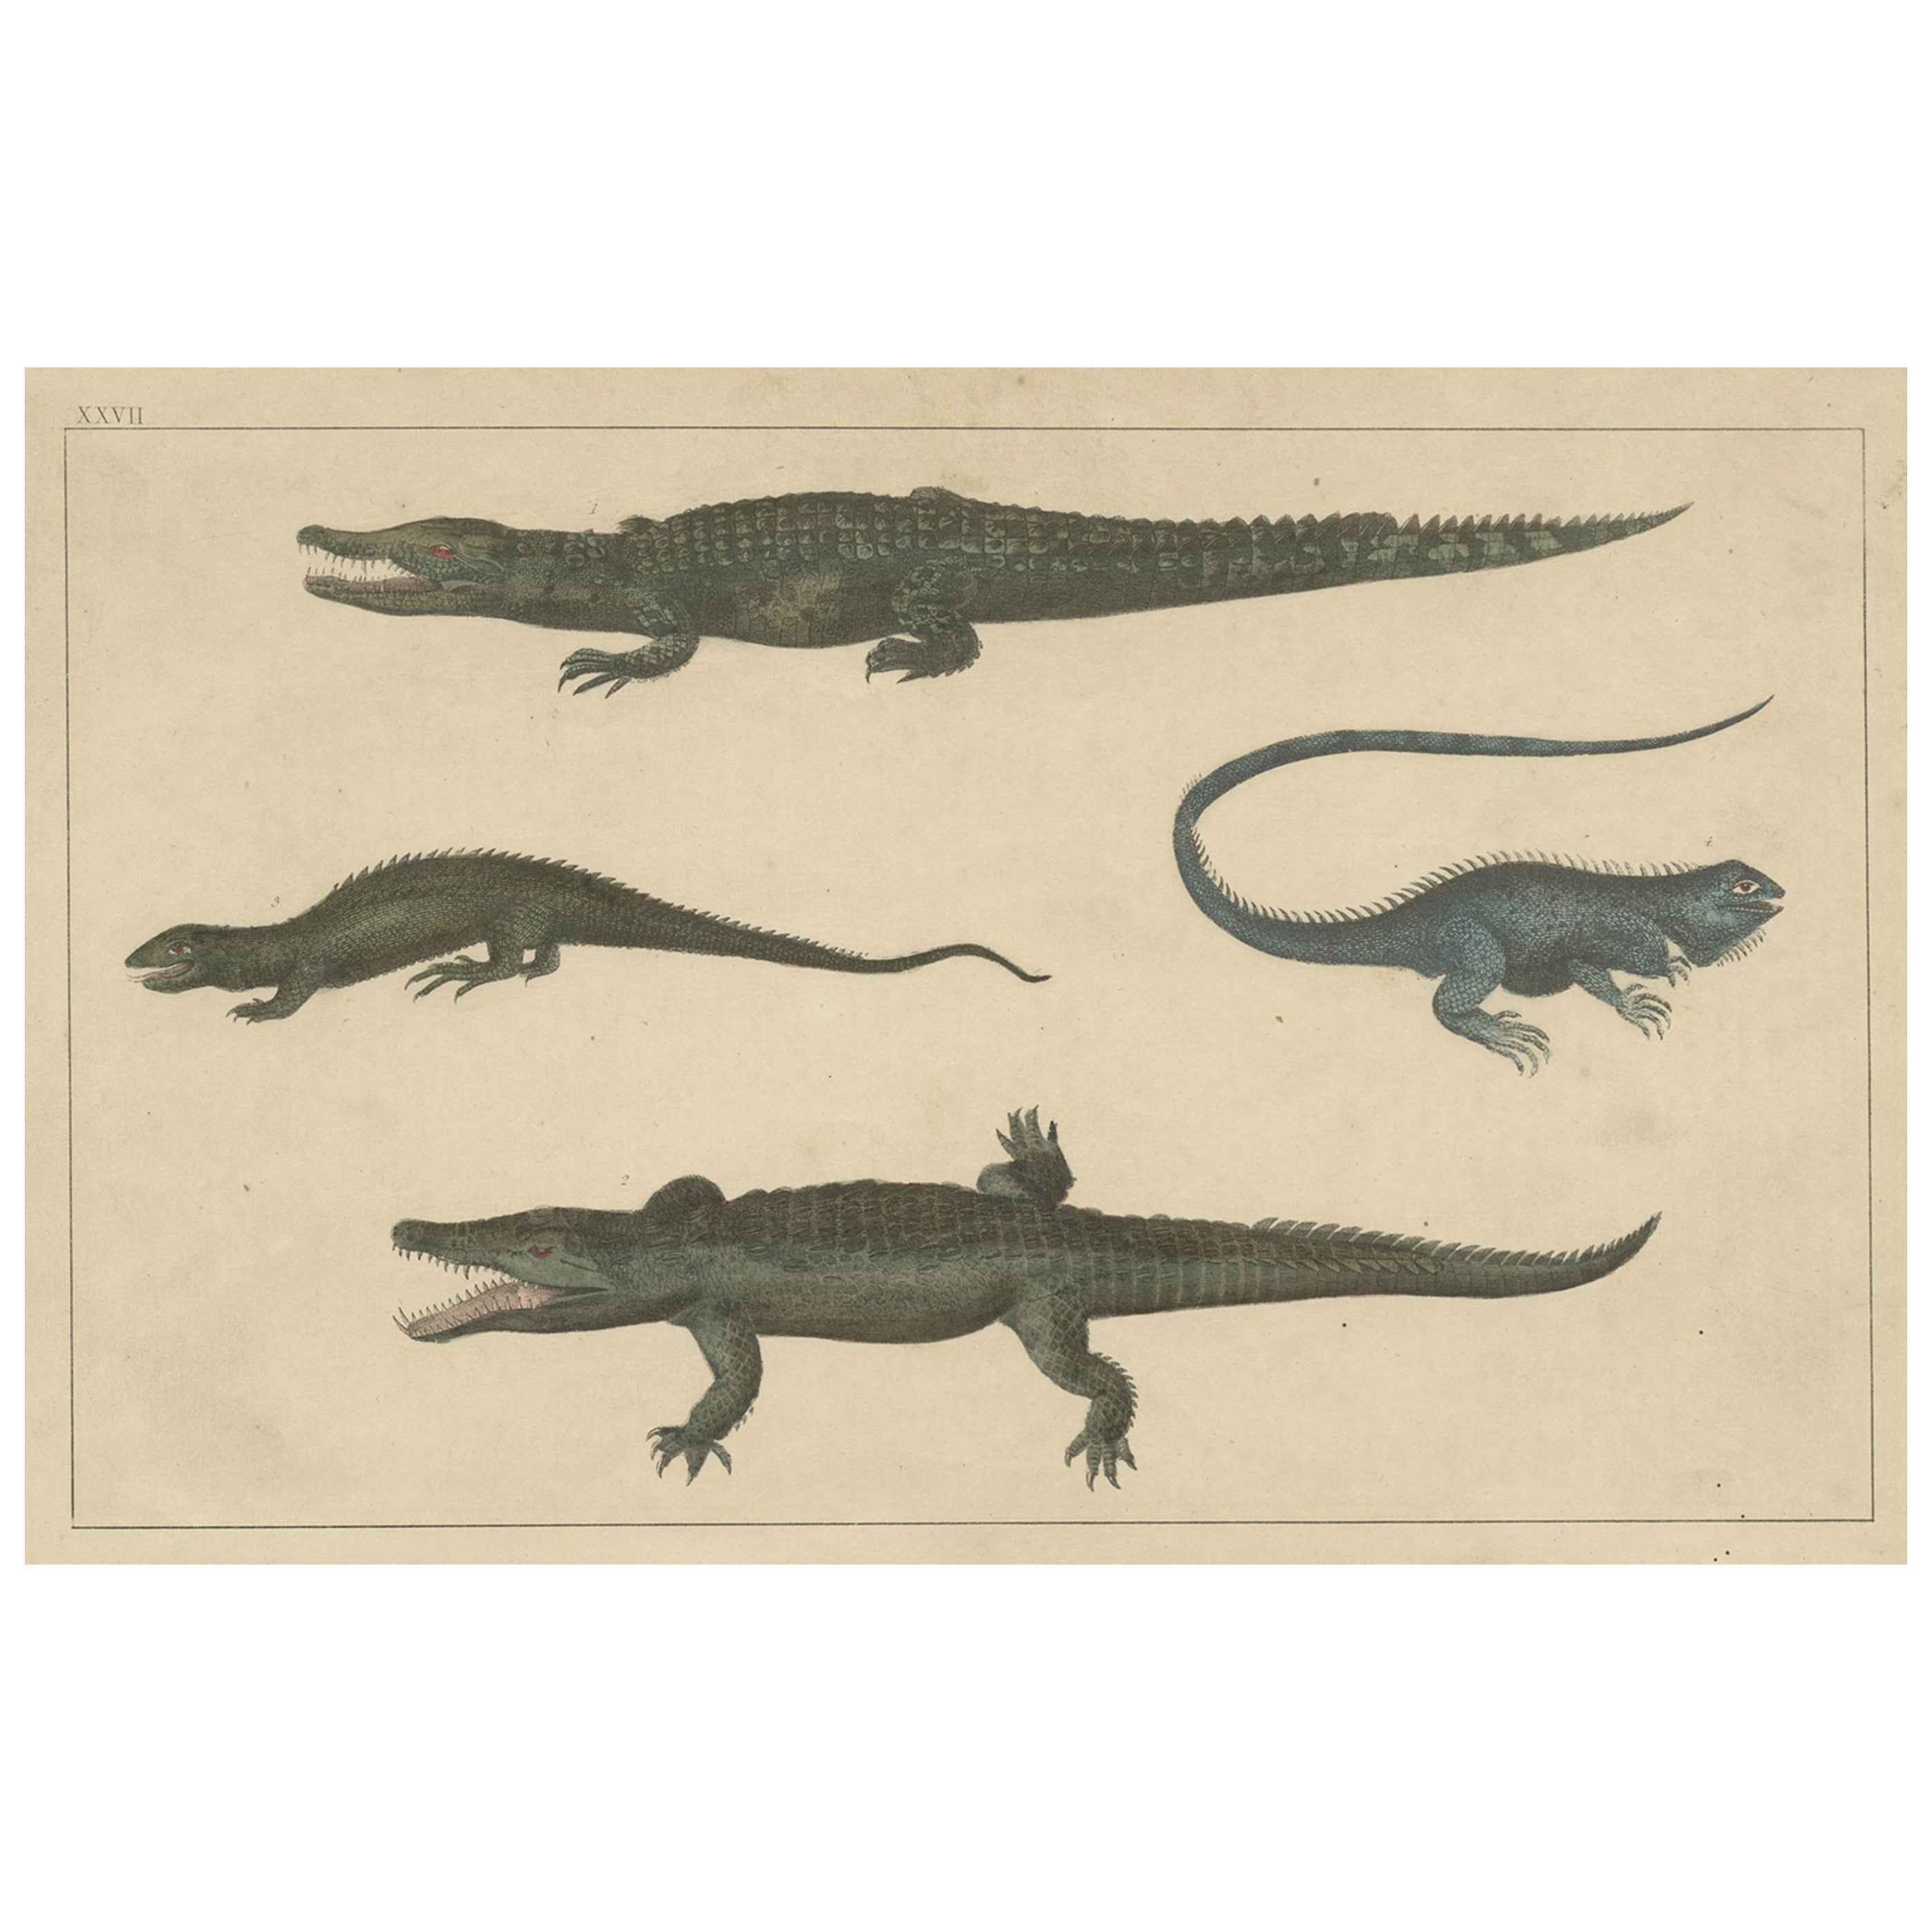 Antiker Druck verschiedener Reptilien wie Krokodil, Iguana, Lizzard, um 1852